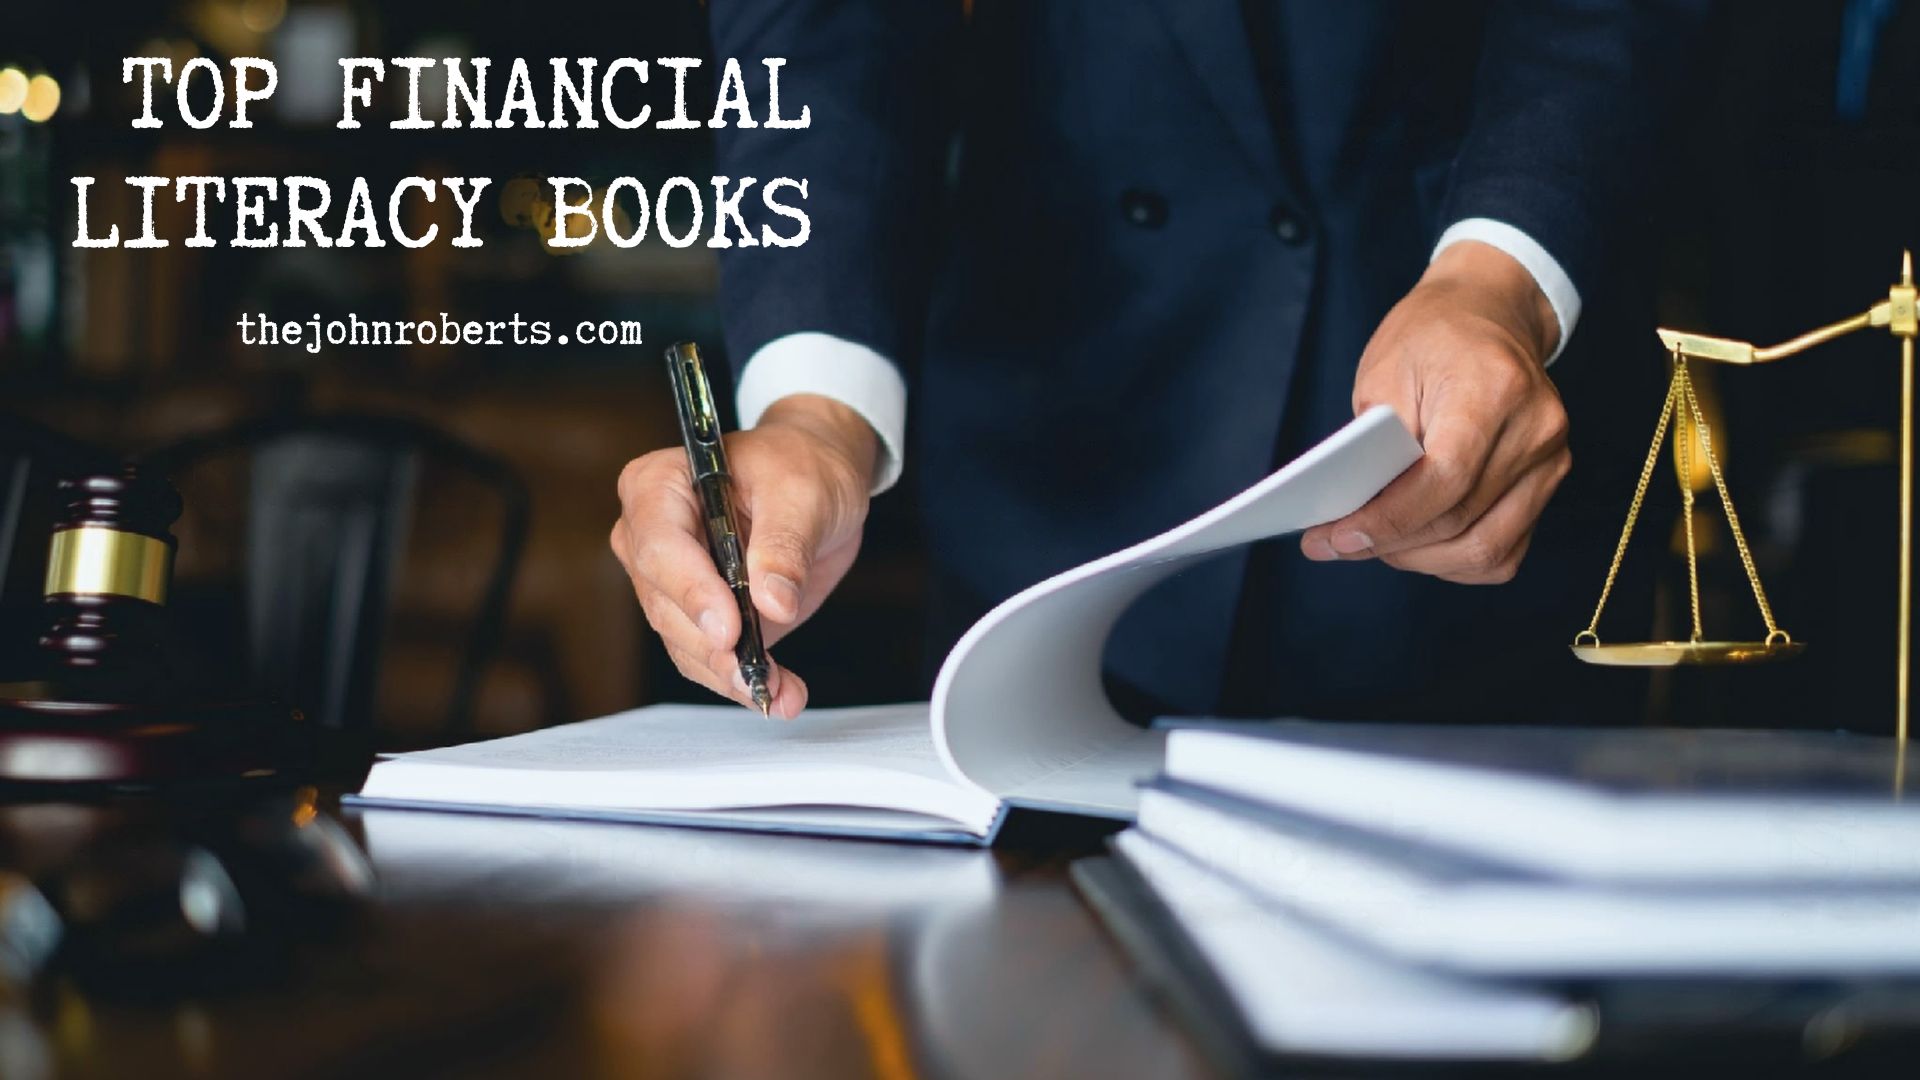 Top Financial Literacy Books